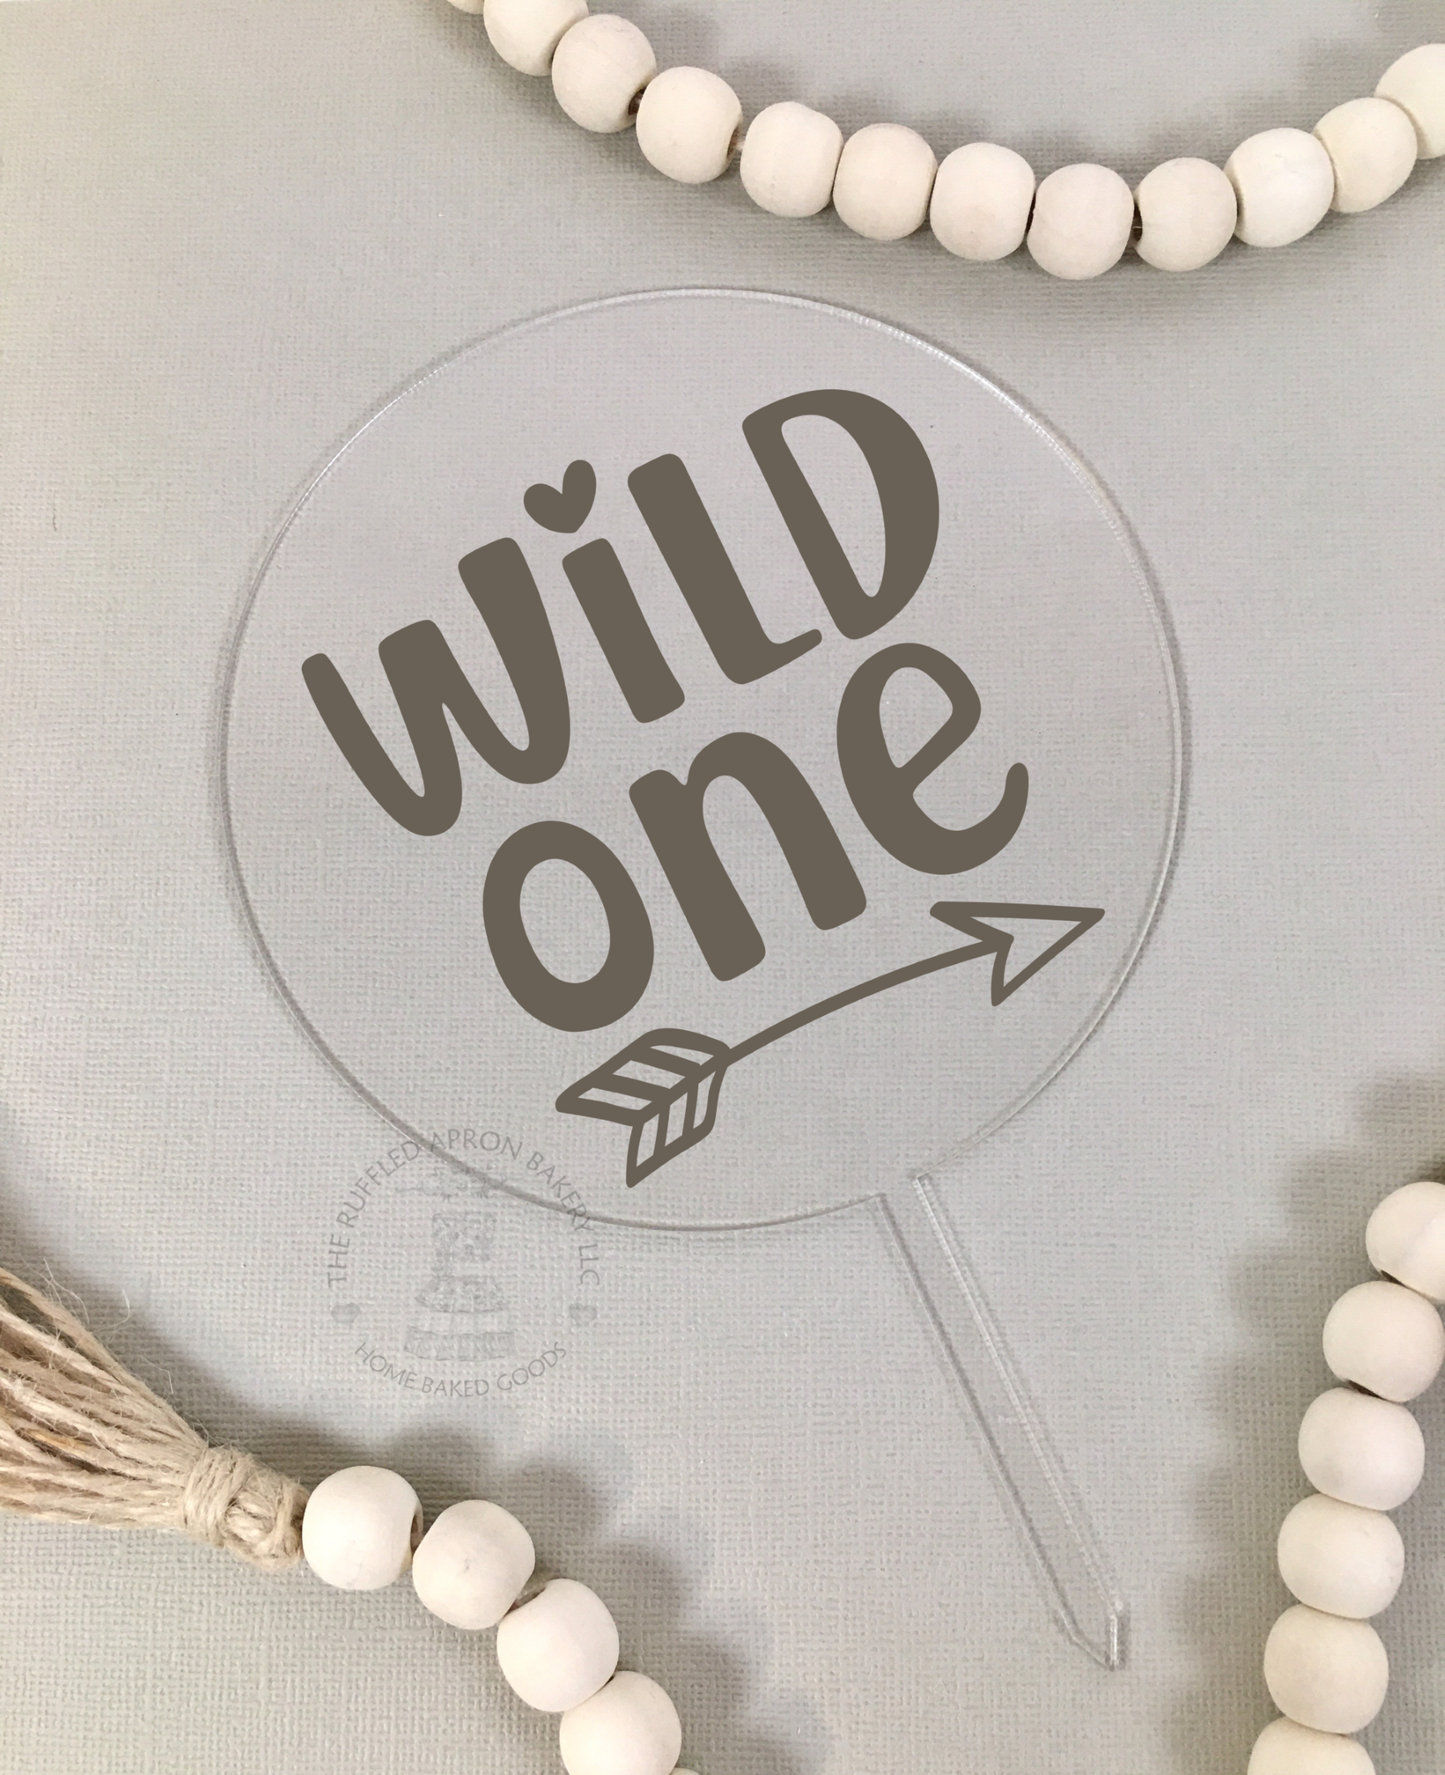 Wild One with Arrow Cake Topper